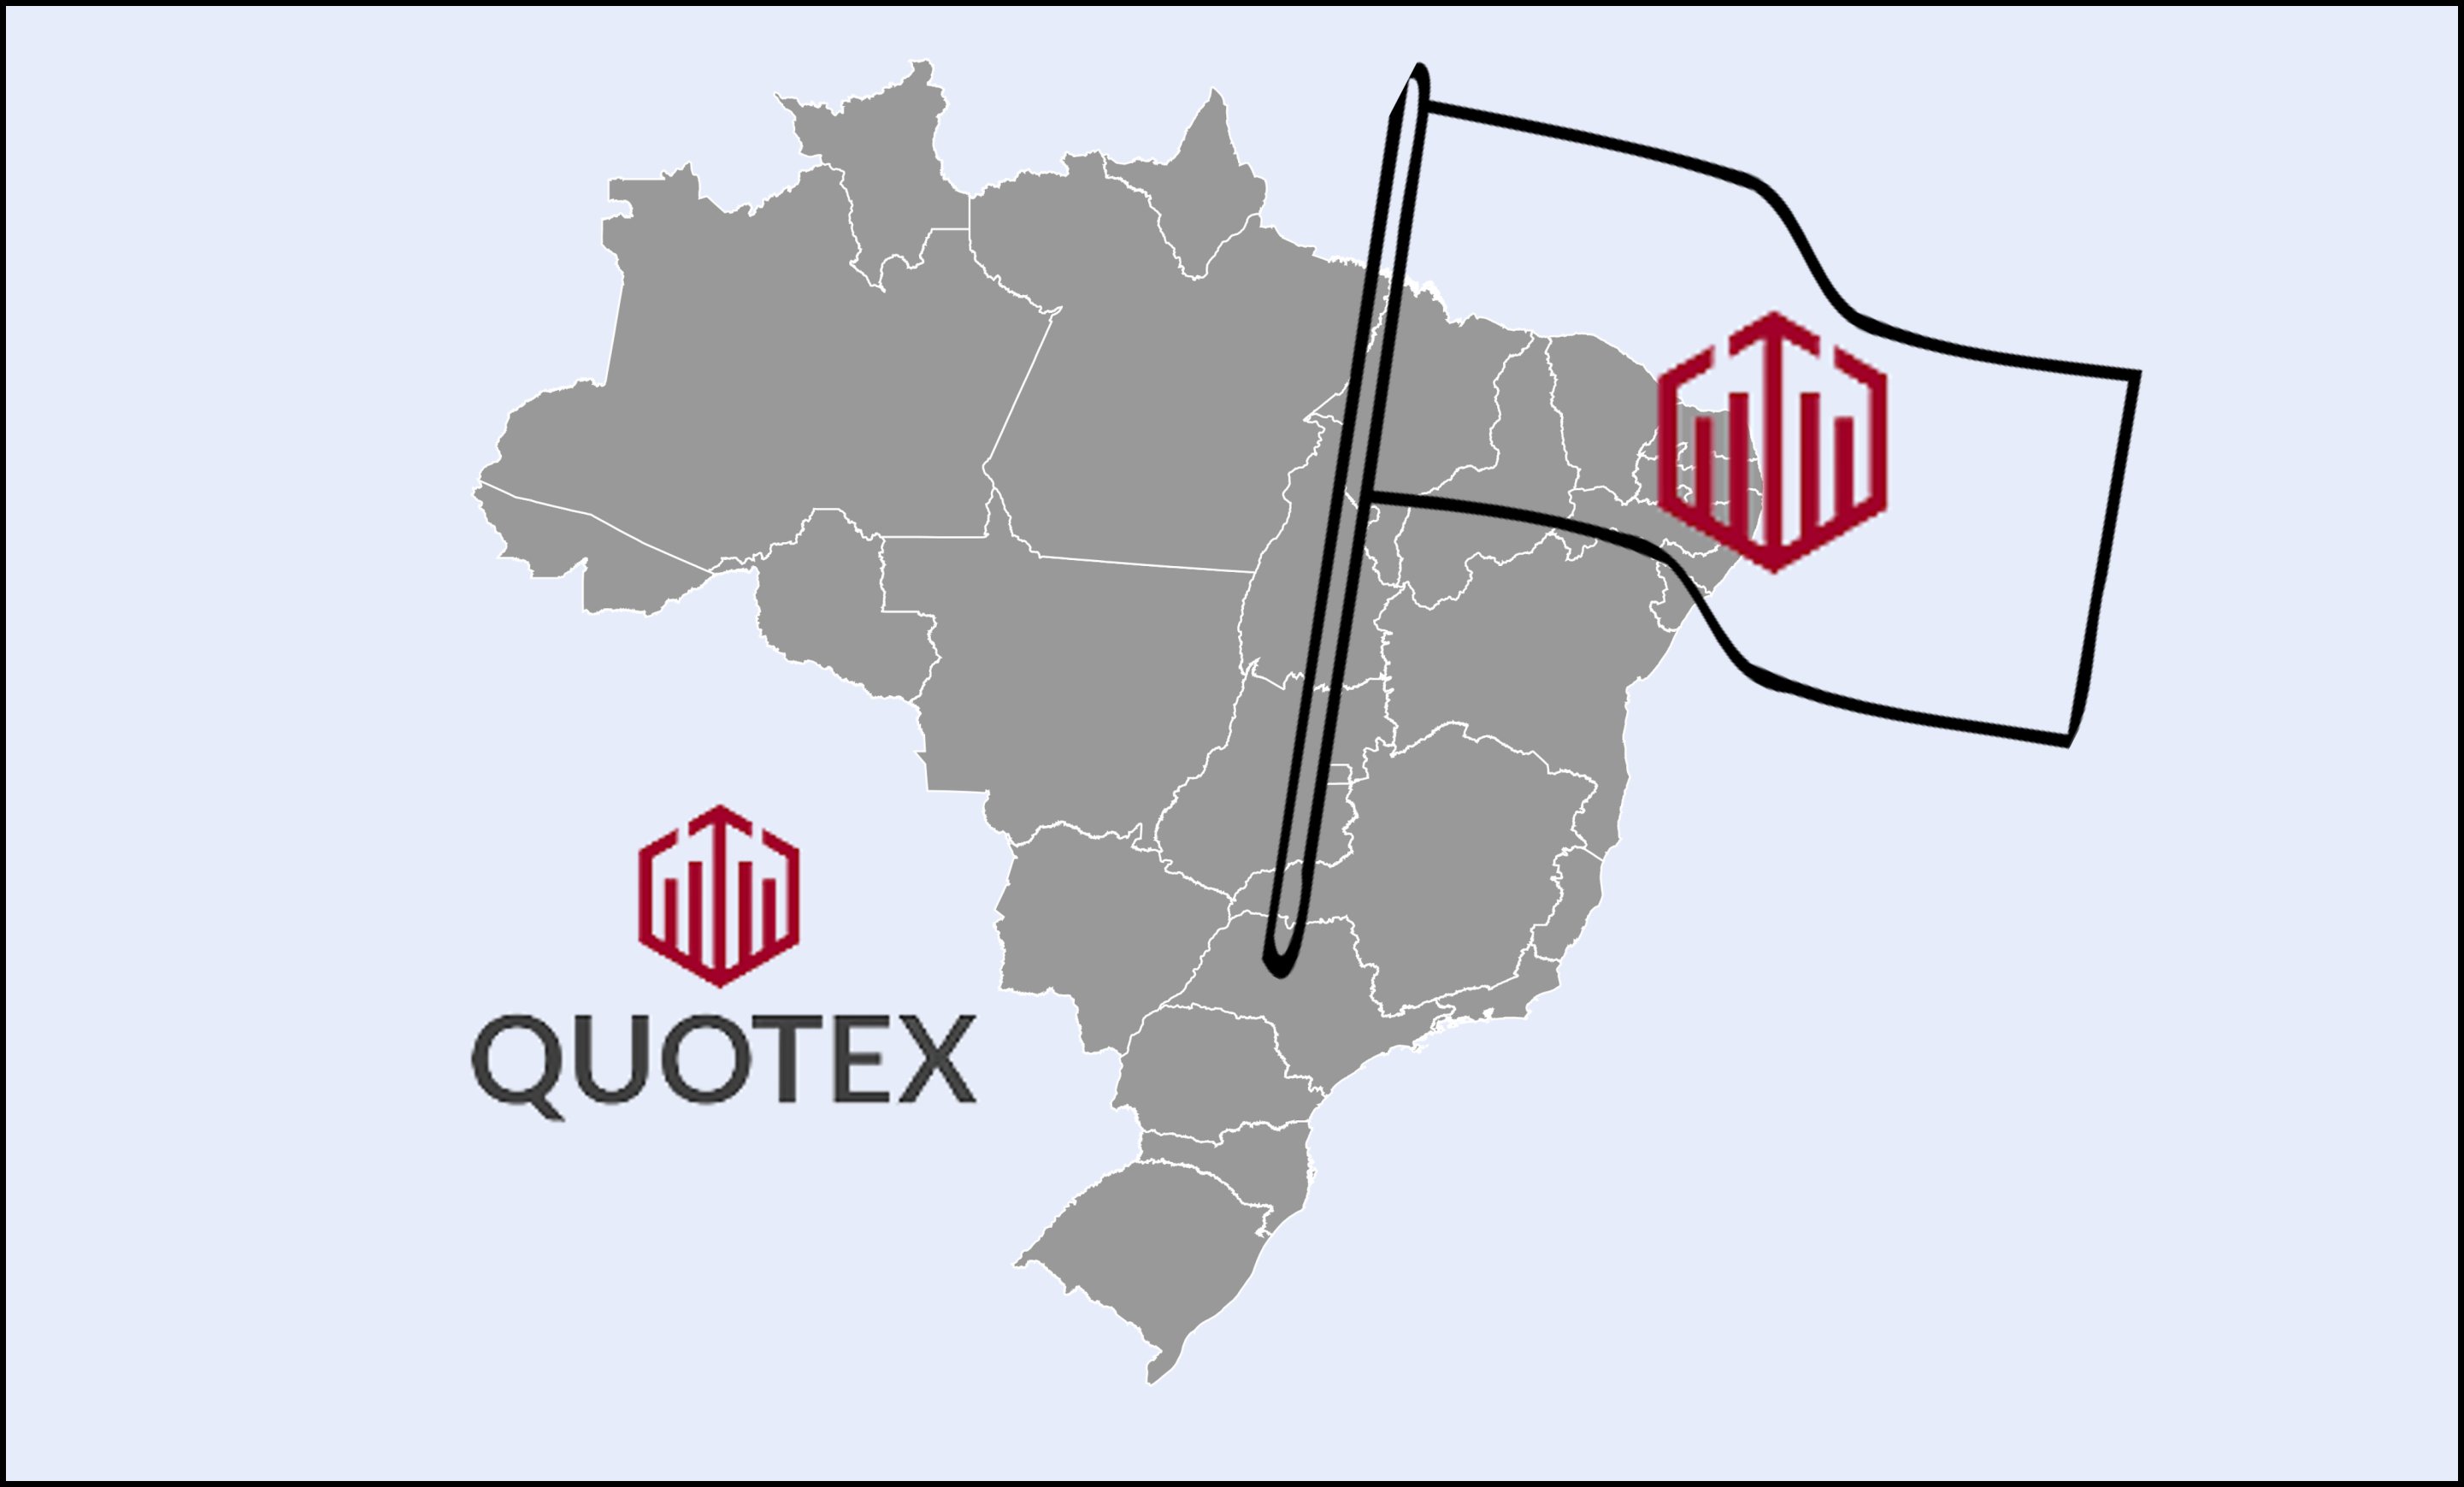 Quotex se estabelece no Brasil